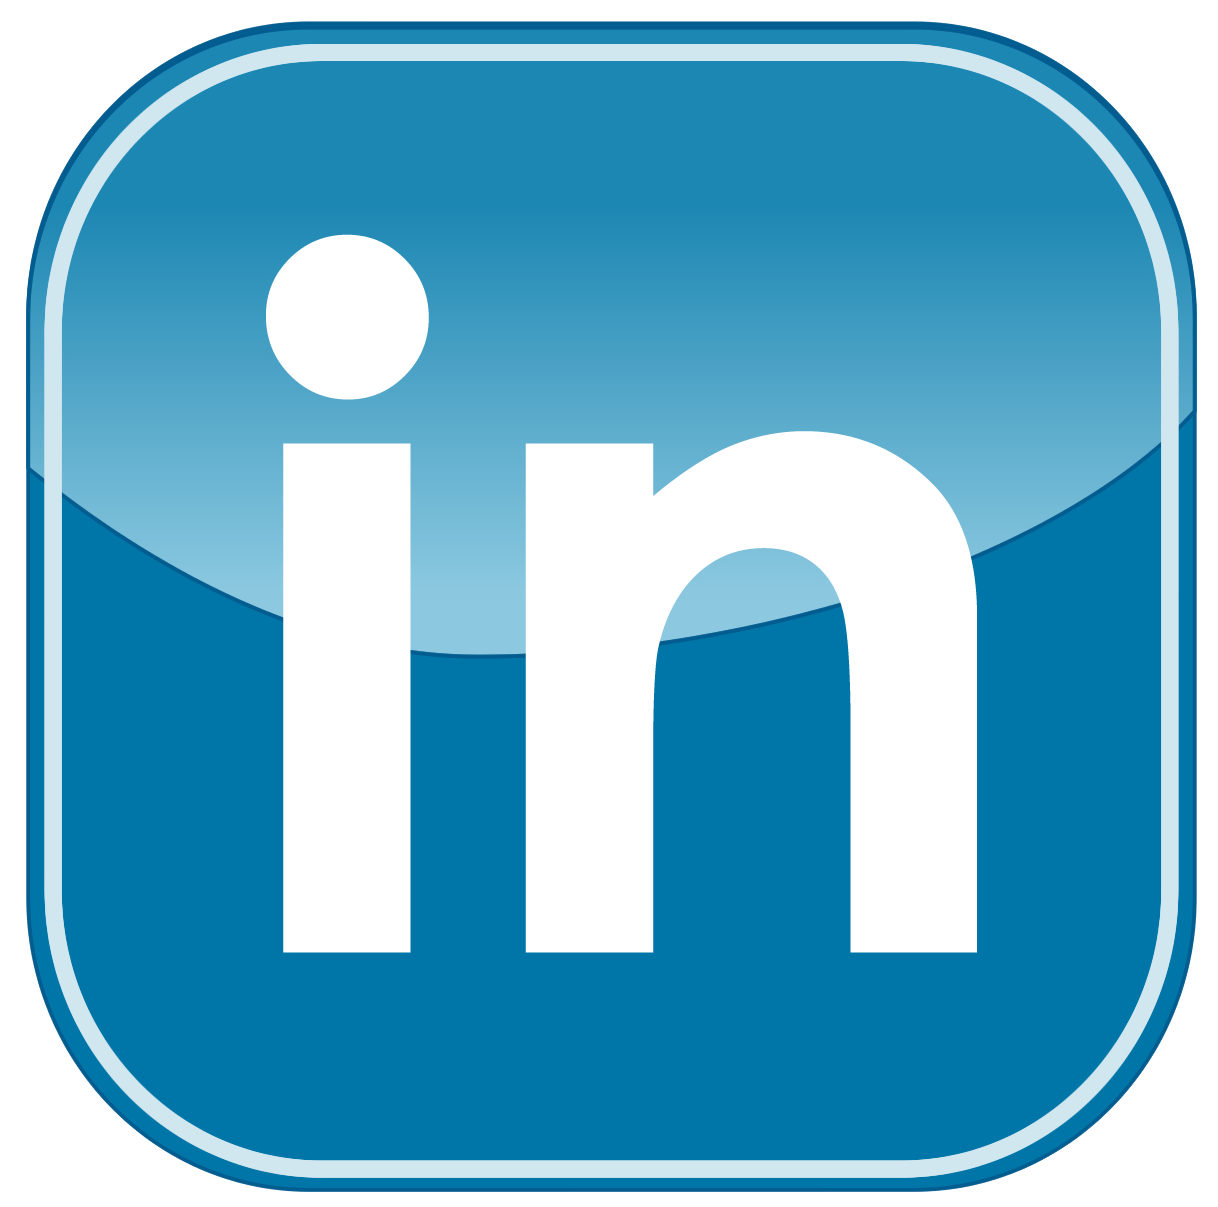 C&C Networks on LinkedIn